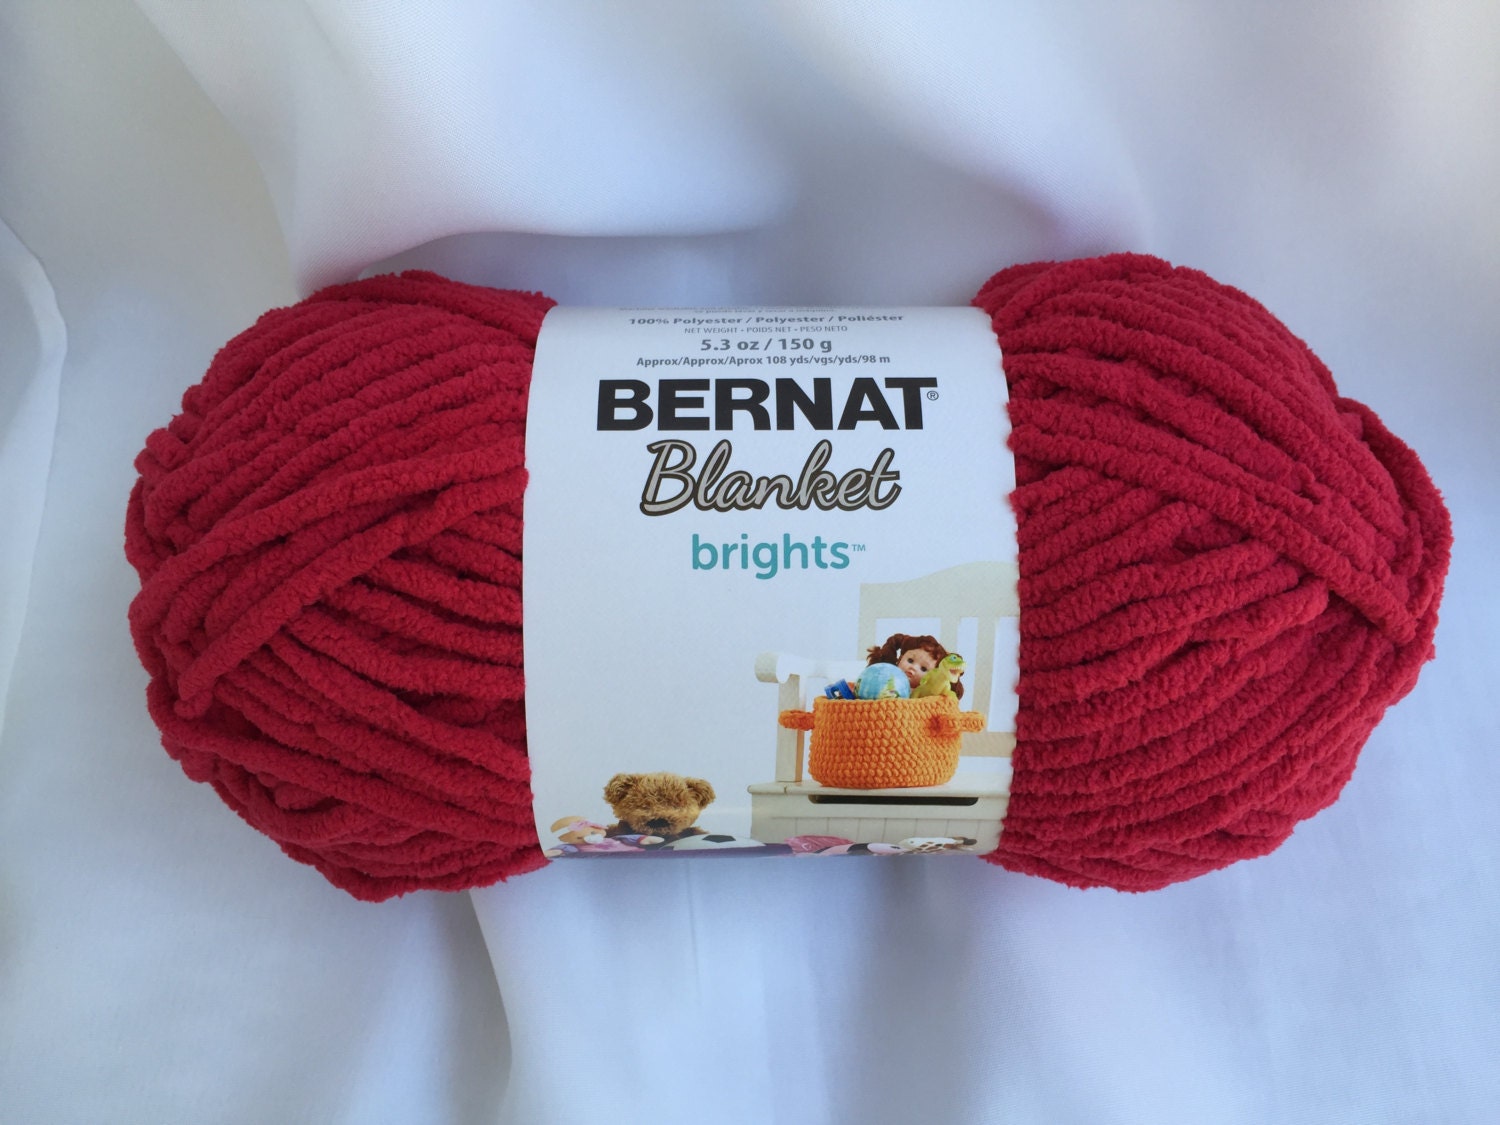 Bernat Blanket Brights, Race Car Red, 10.5 oz